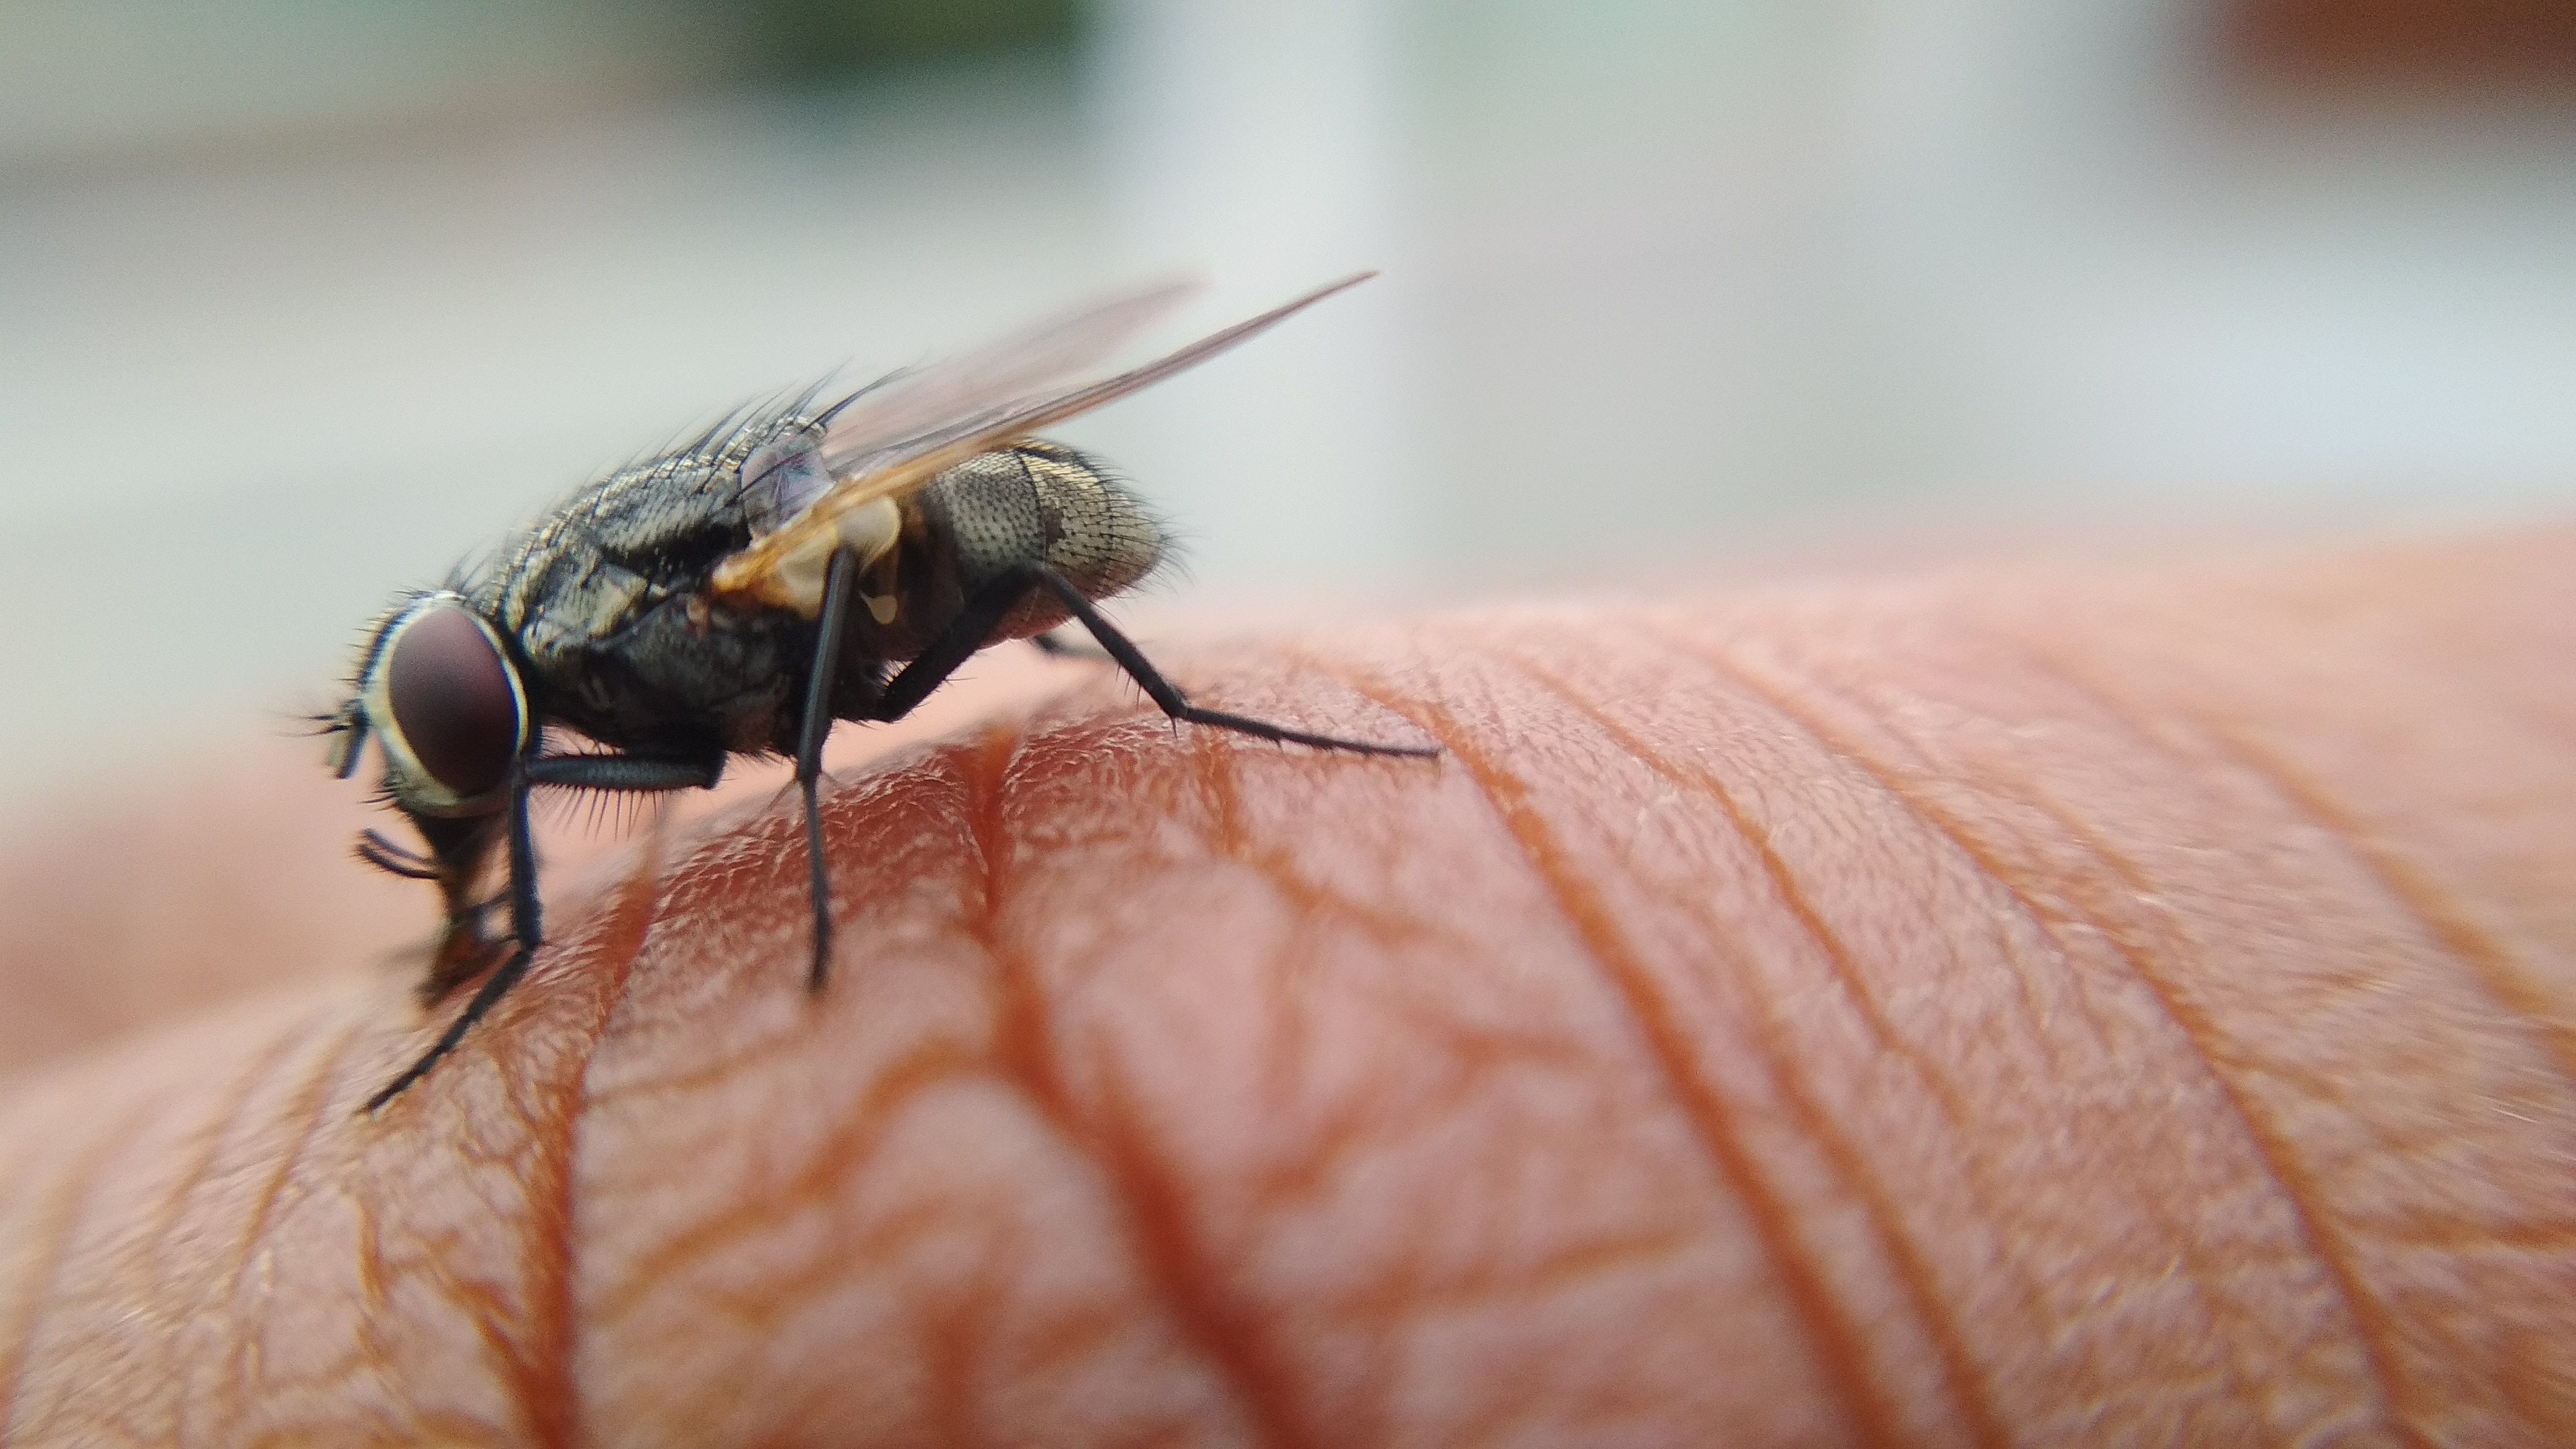 Живую жужжащую муху нашли в желудке человека